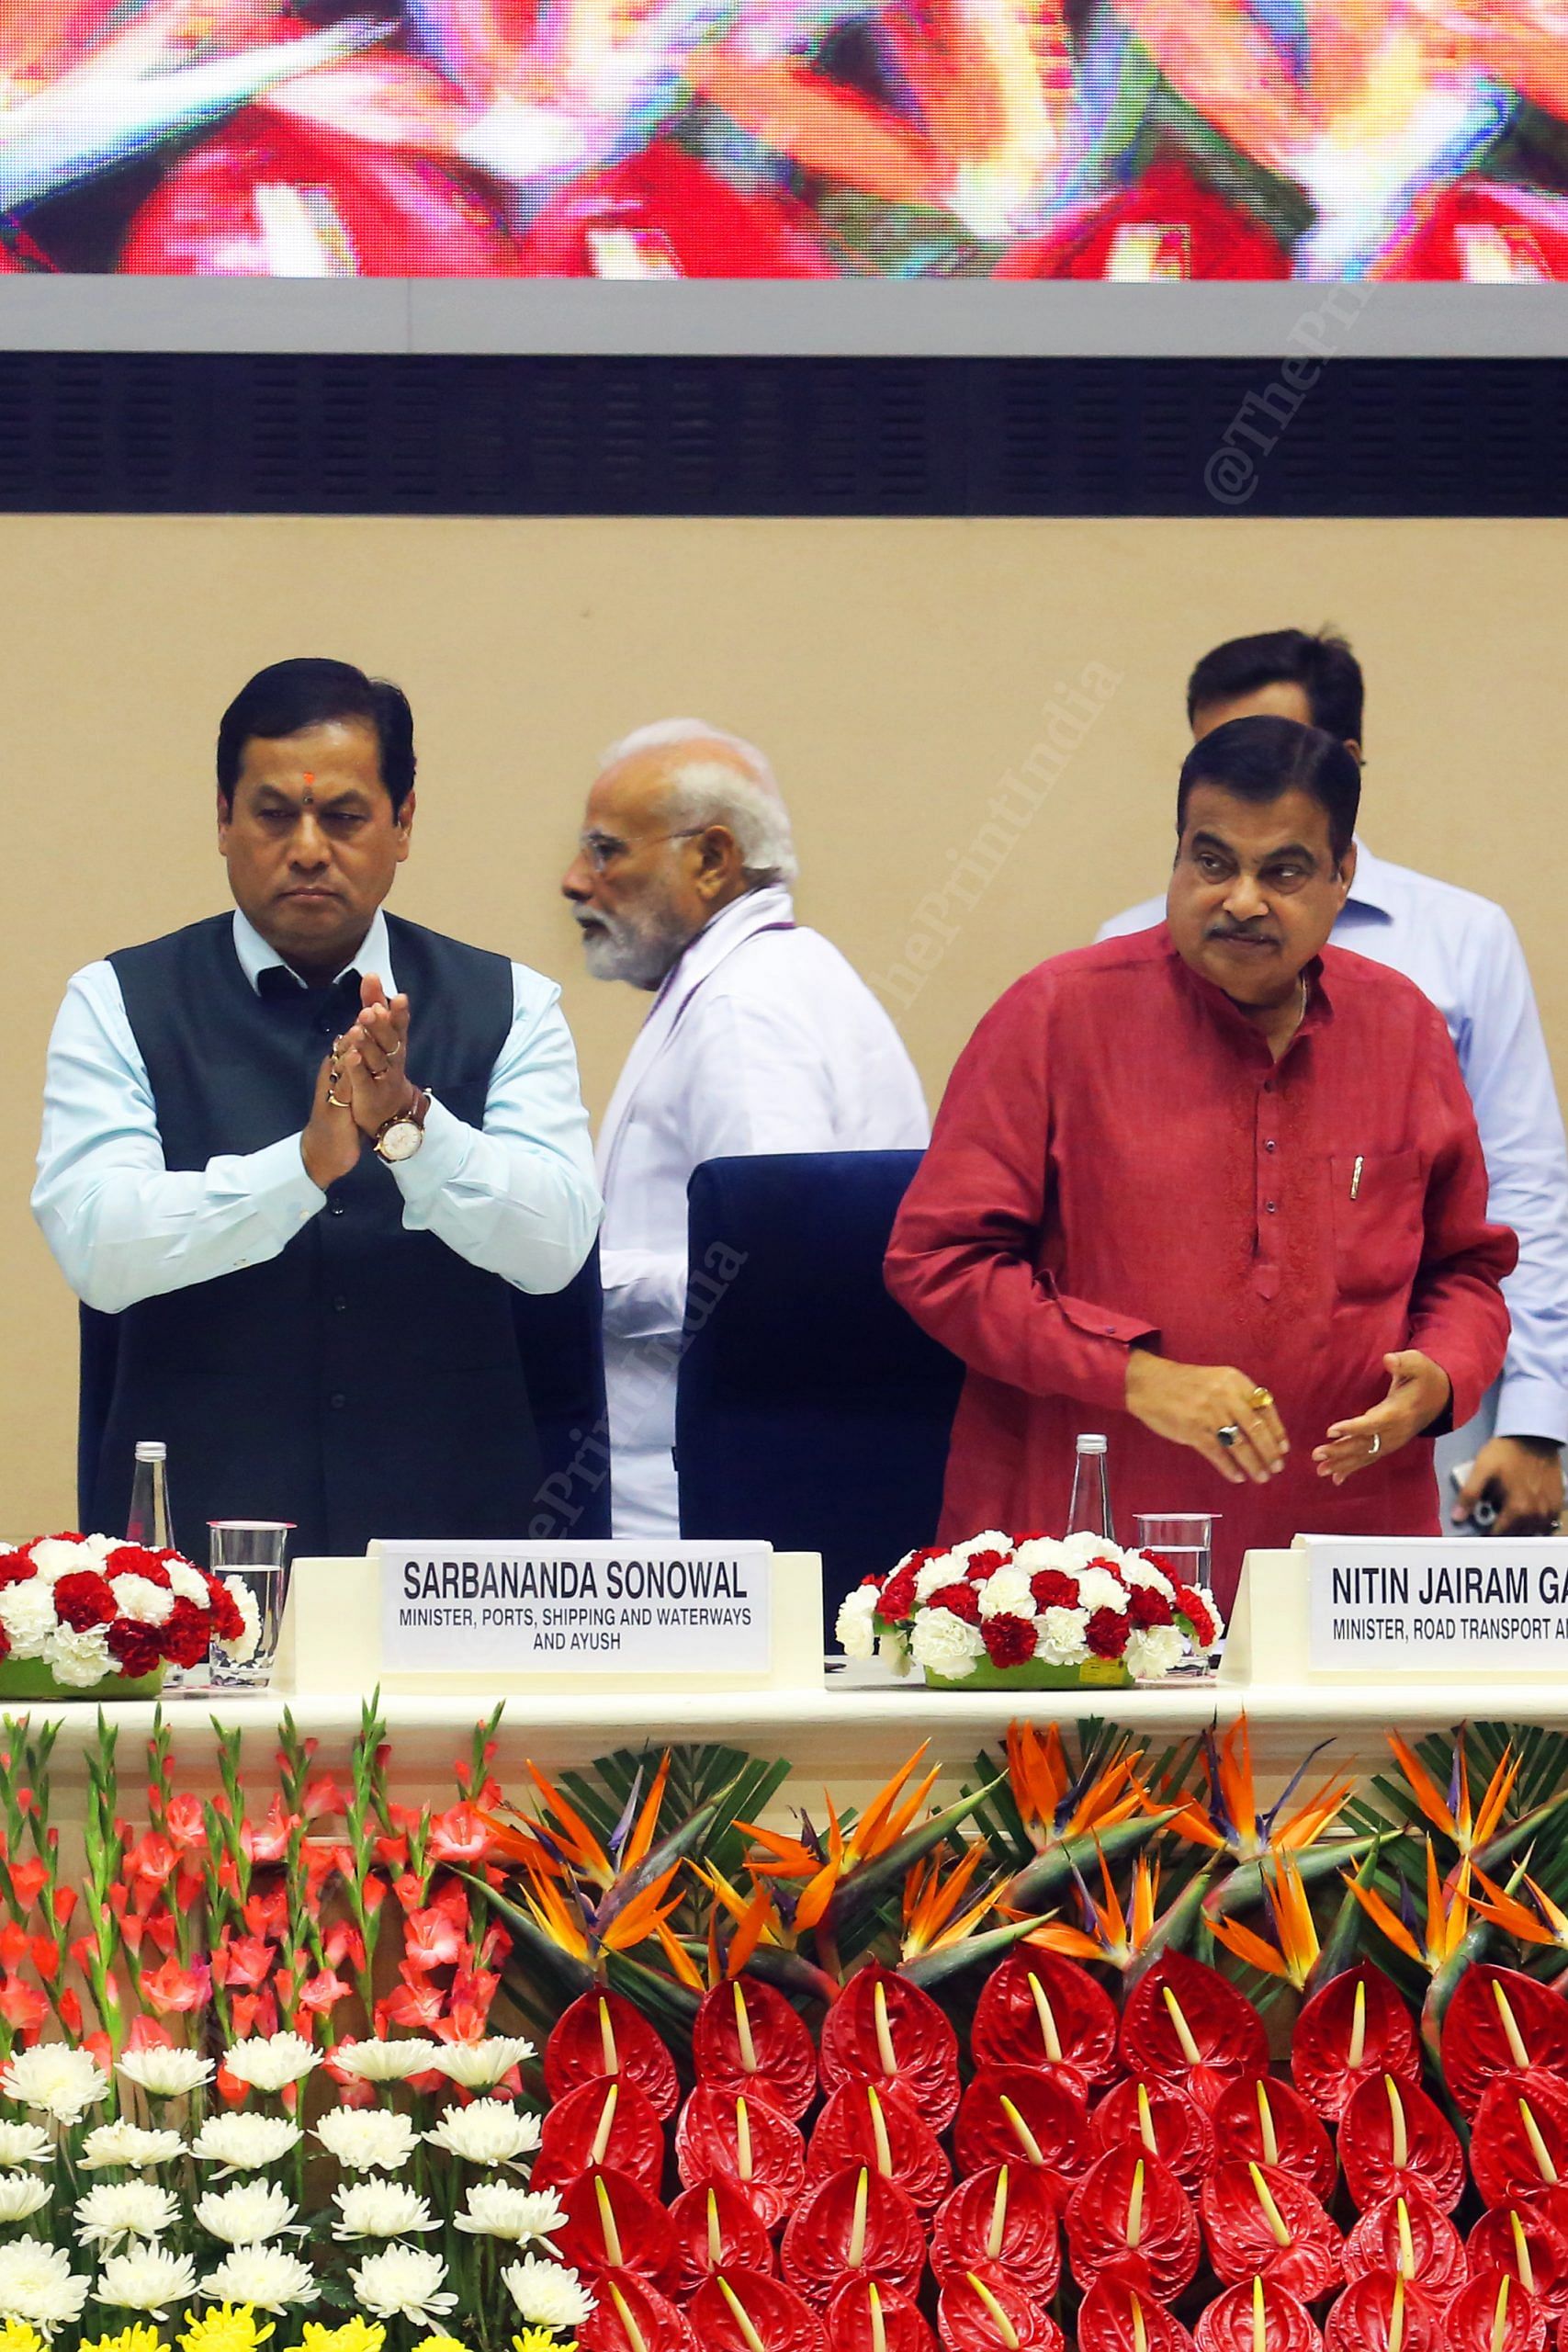 Prime Minister Narendra Modi after his speech at the event | Photo: Praveen Jain | ThePrint